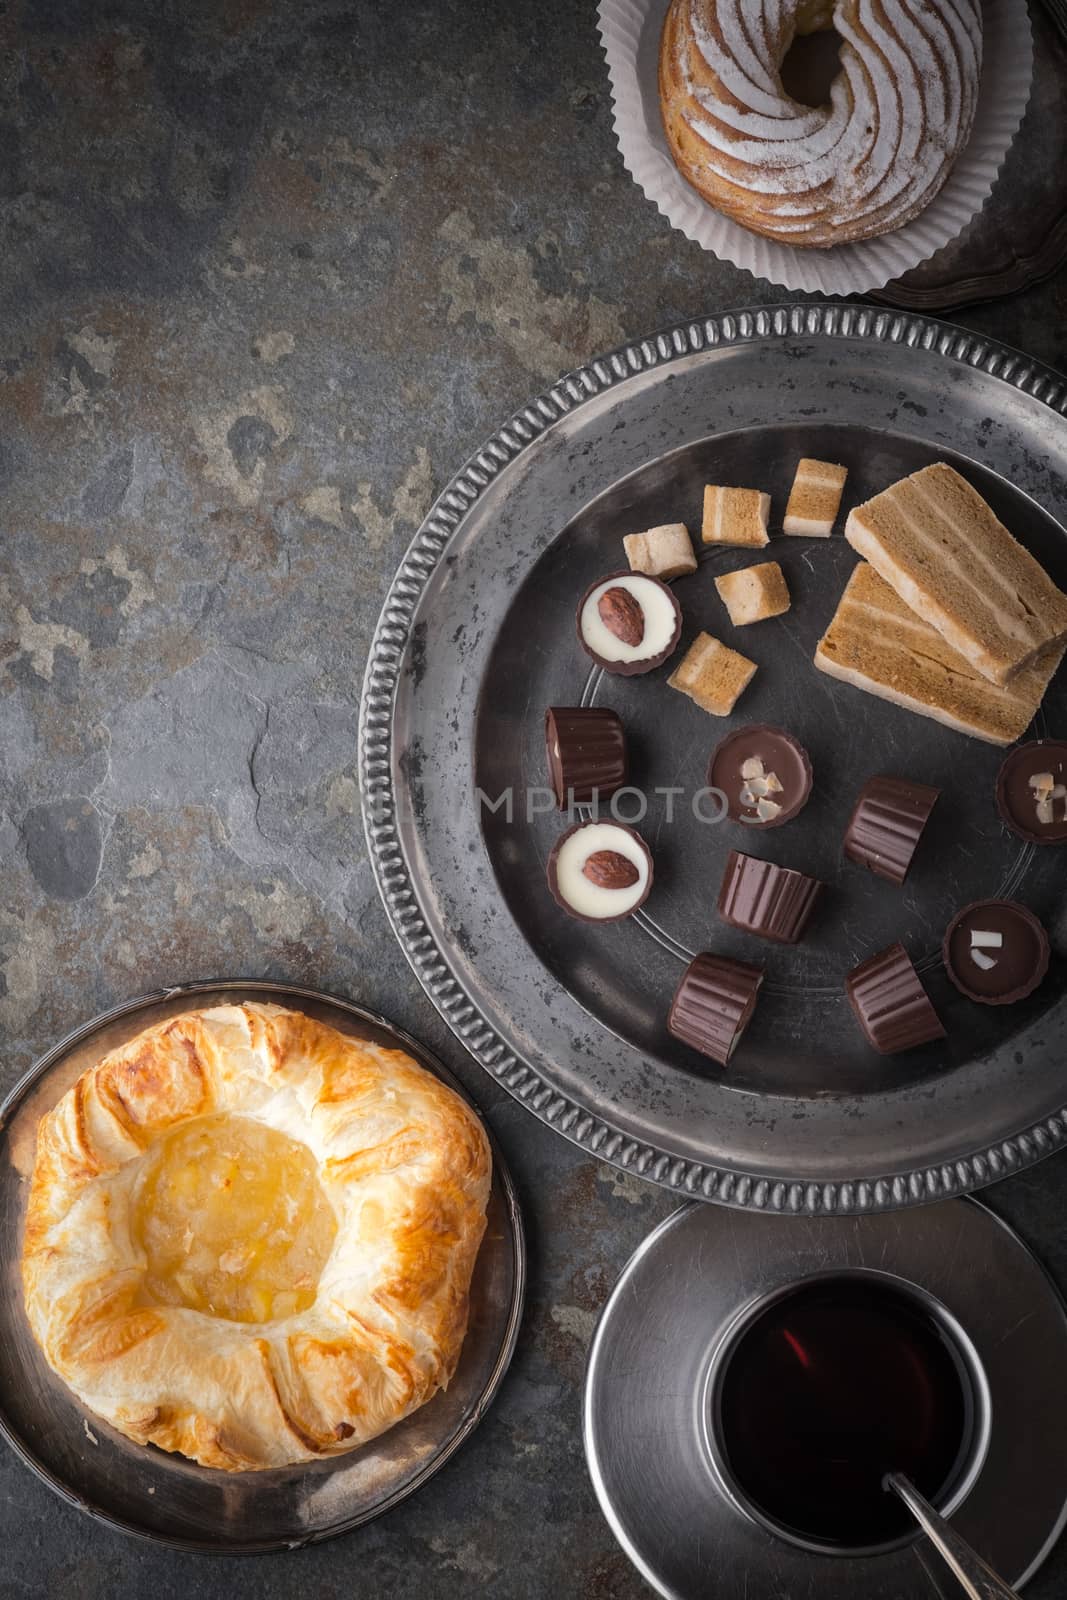 Candy, cake and coffee on a gray stone by Deniskarpenkov